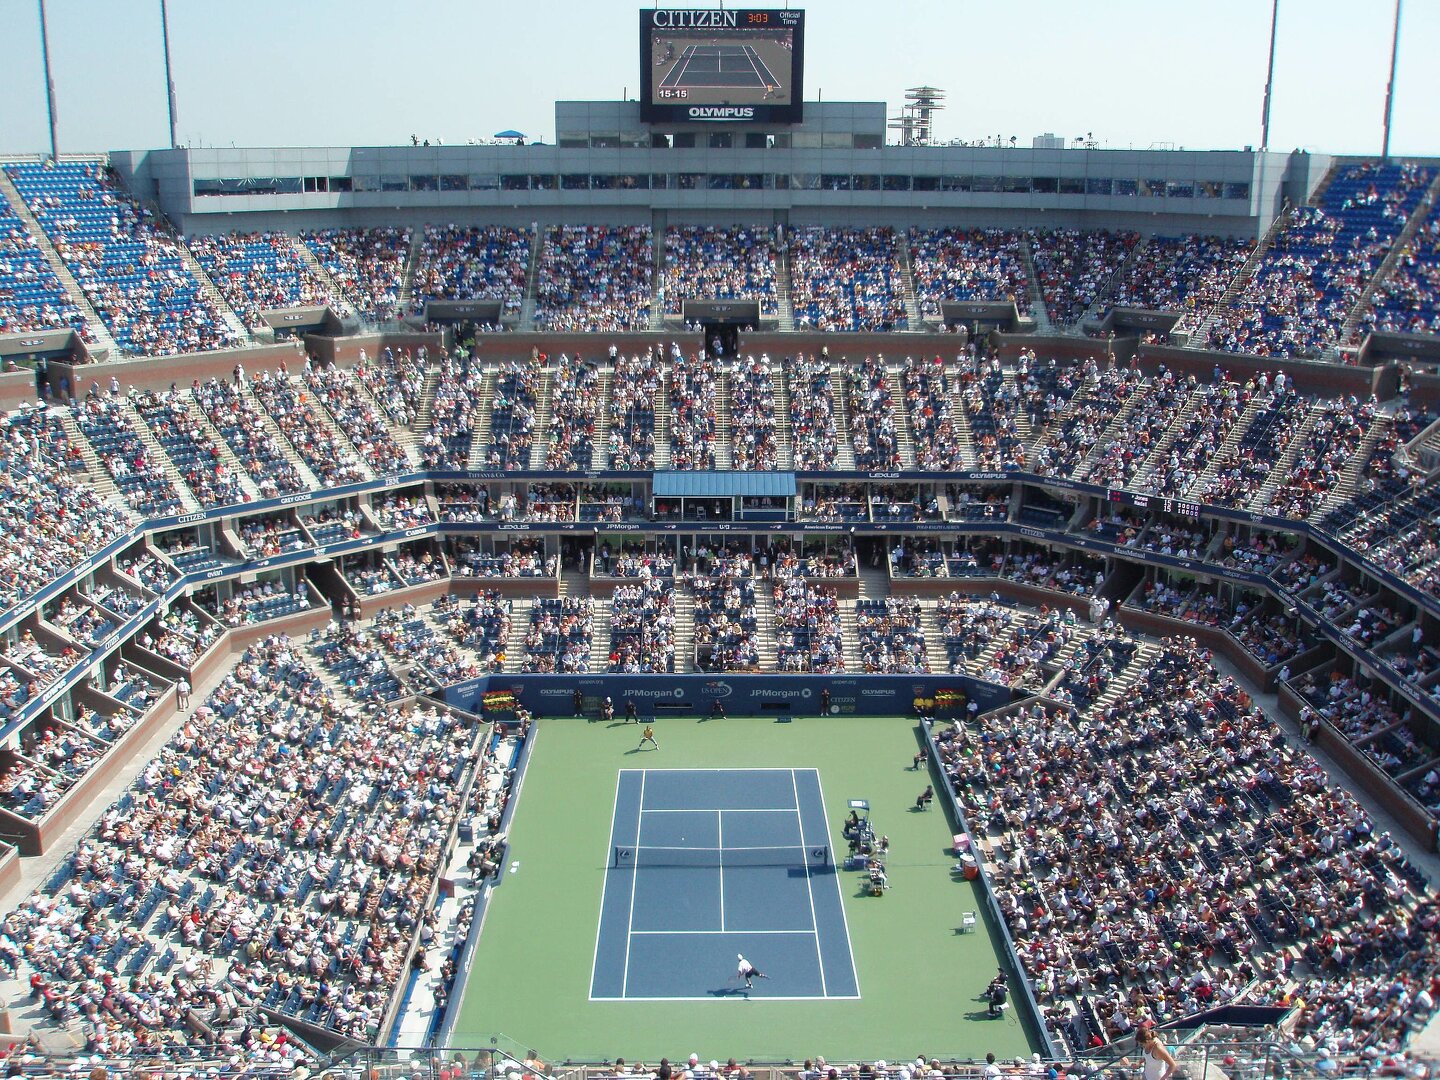 highest seating capacity tennis